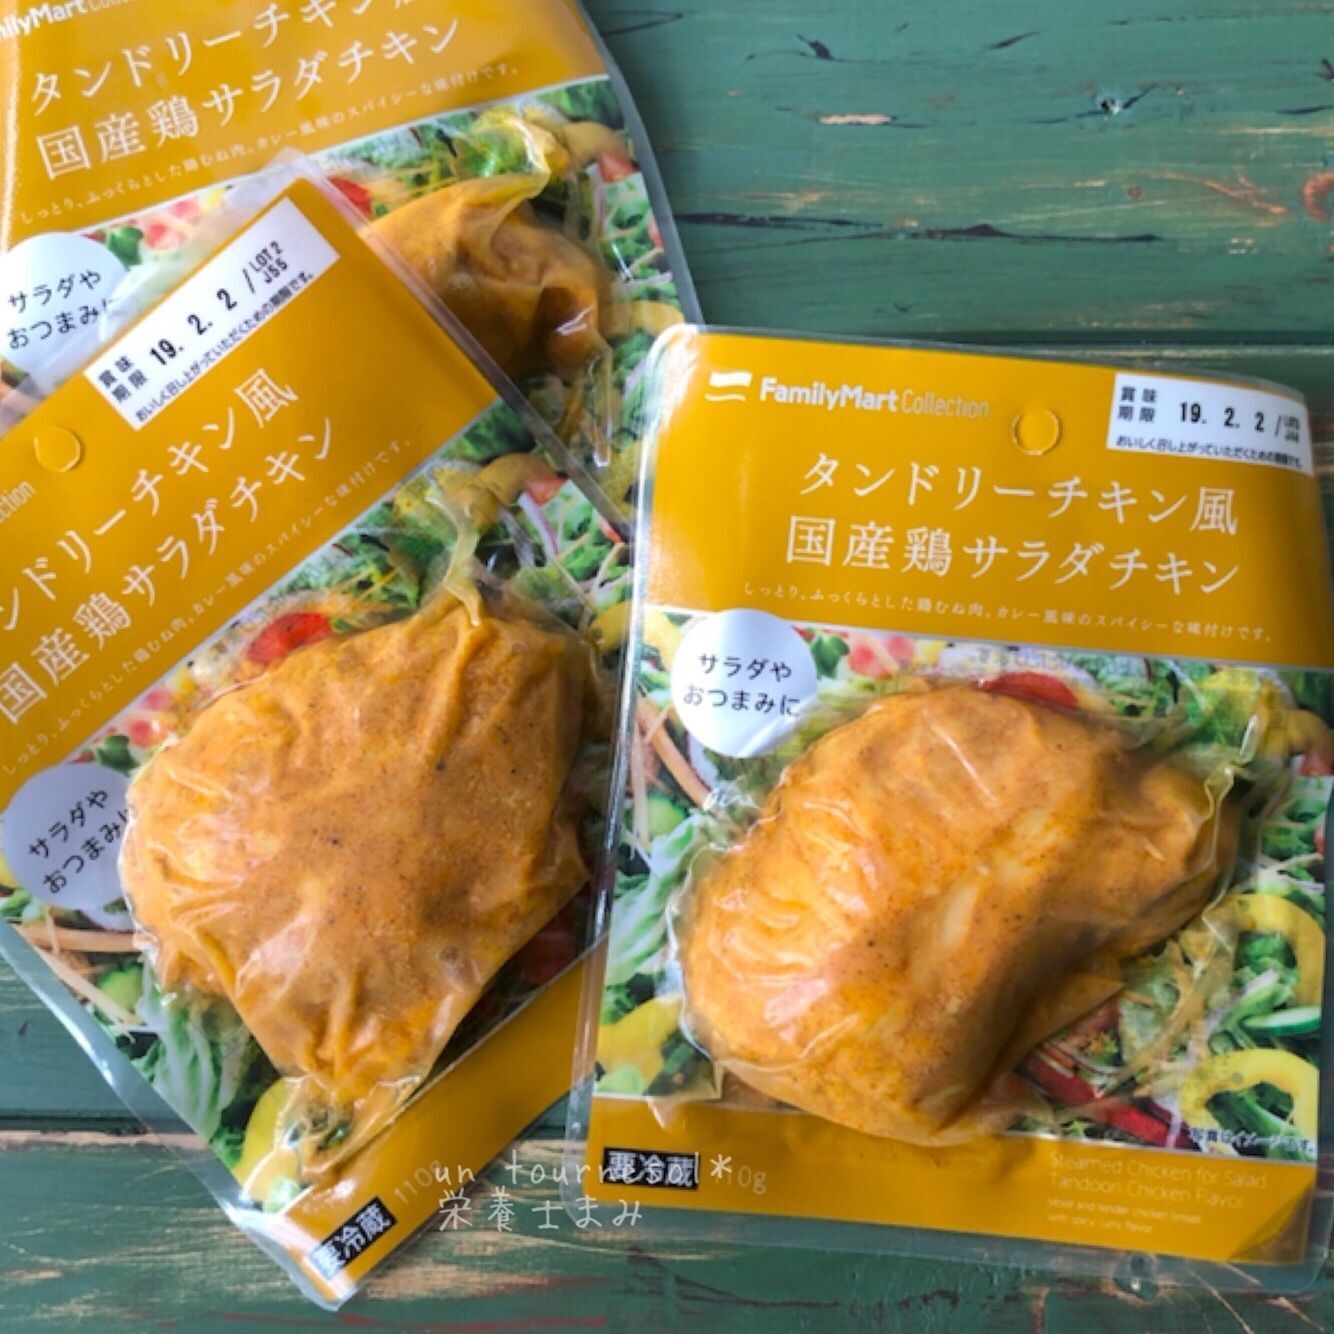 Family Mart【タンドリーチキン風 国産鶏サラダチキン】